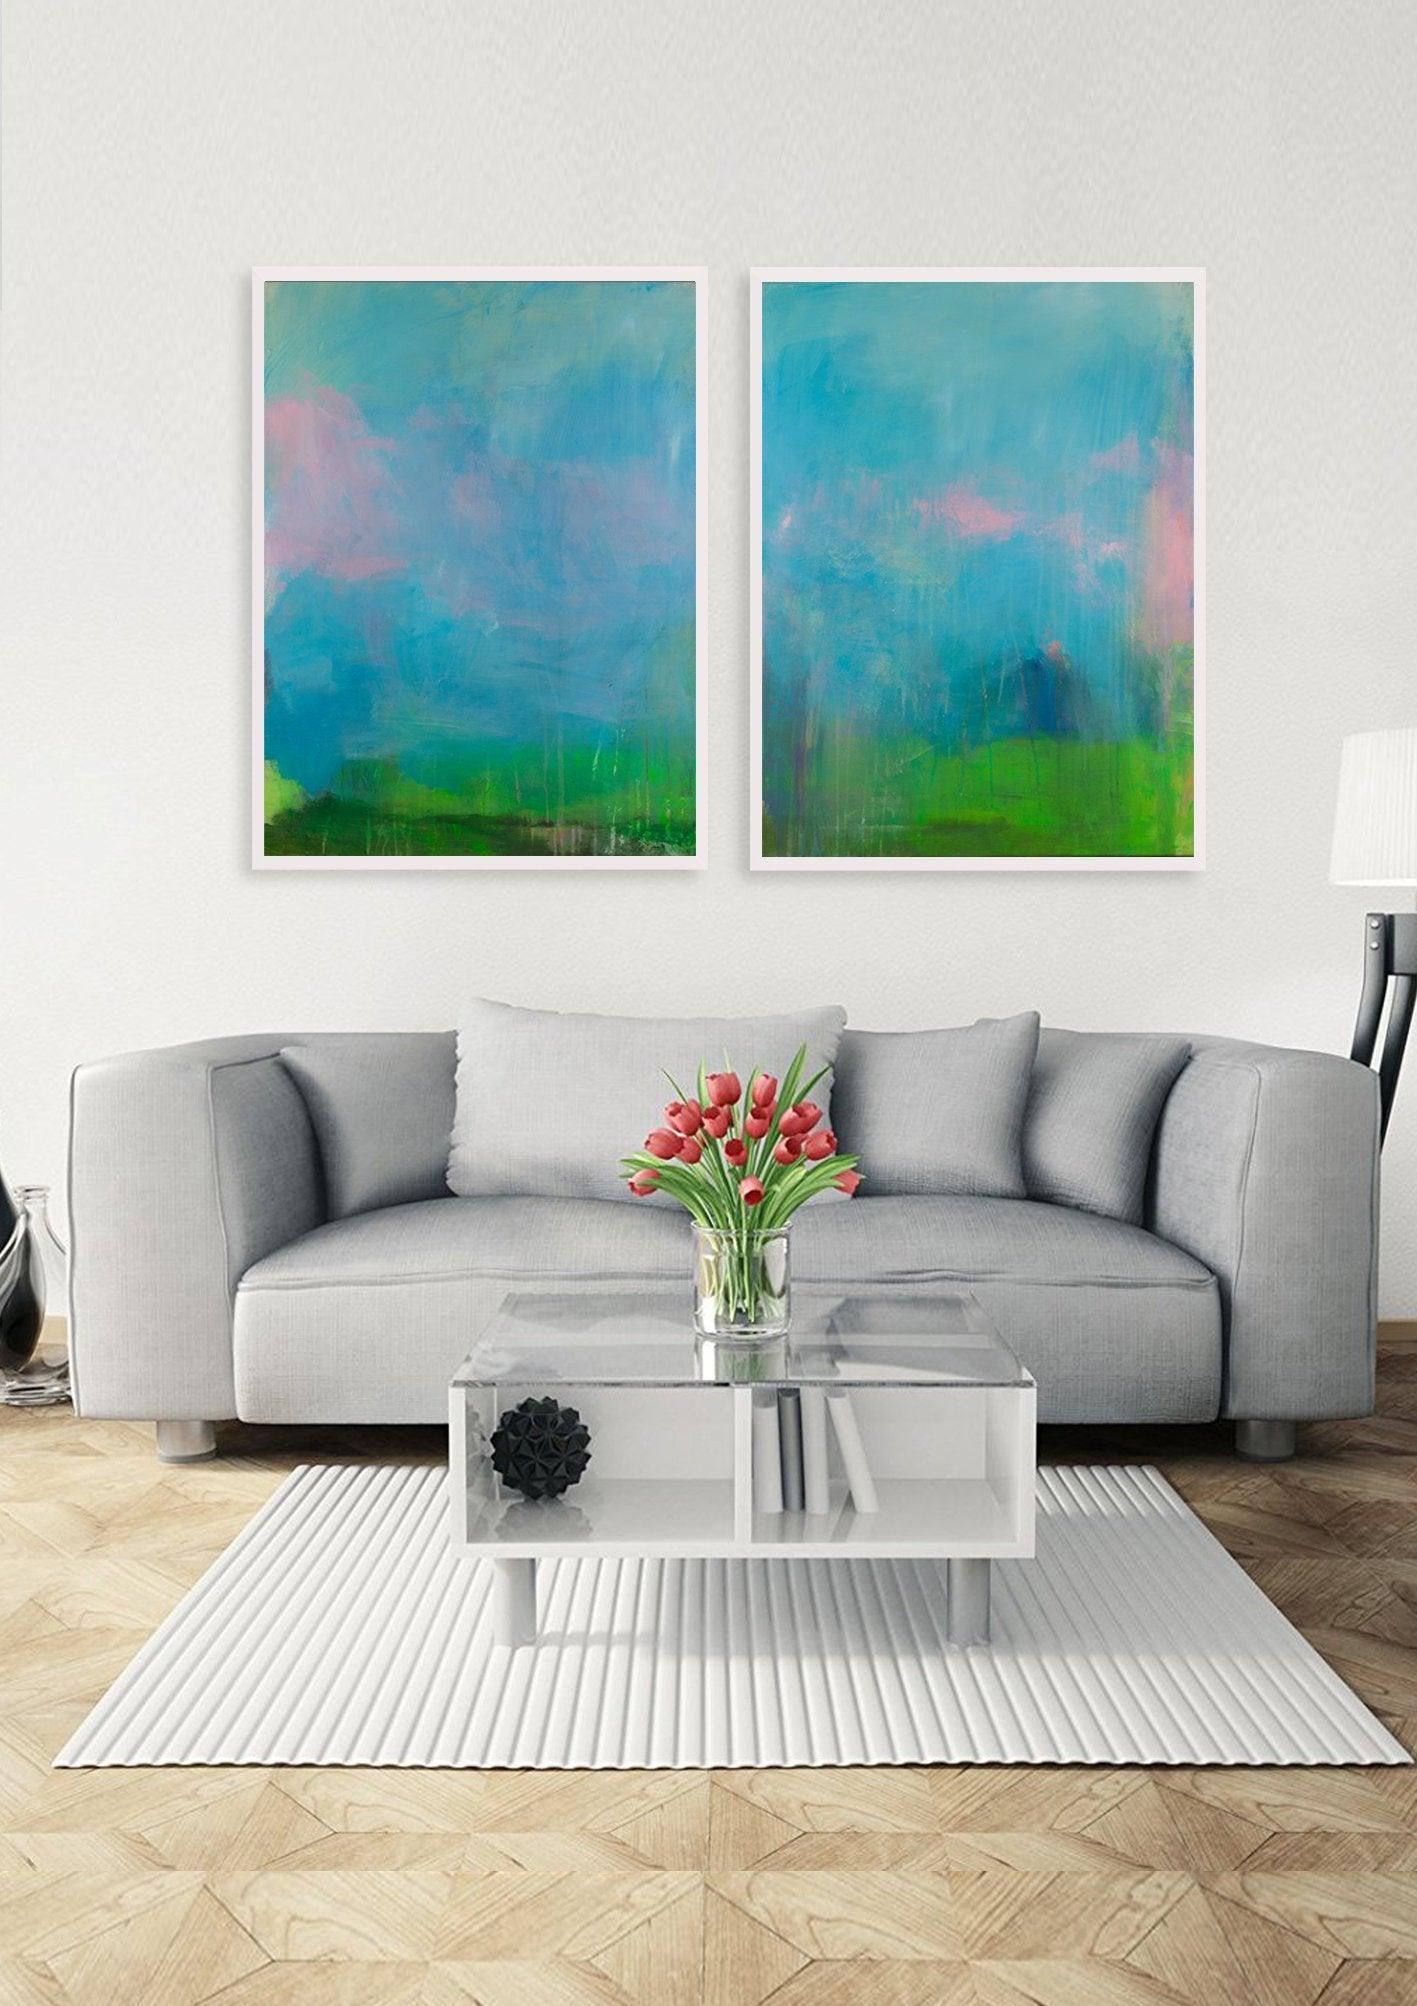 Set of 2 Abstract Prints, Wall art set, Large modern prints, colorful abstract set, Set of art for living room, abstract painting prints - camilomattis.com